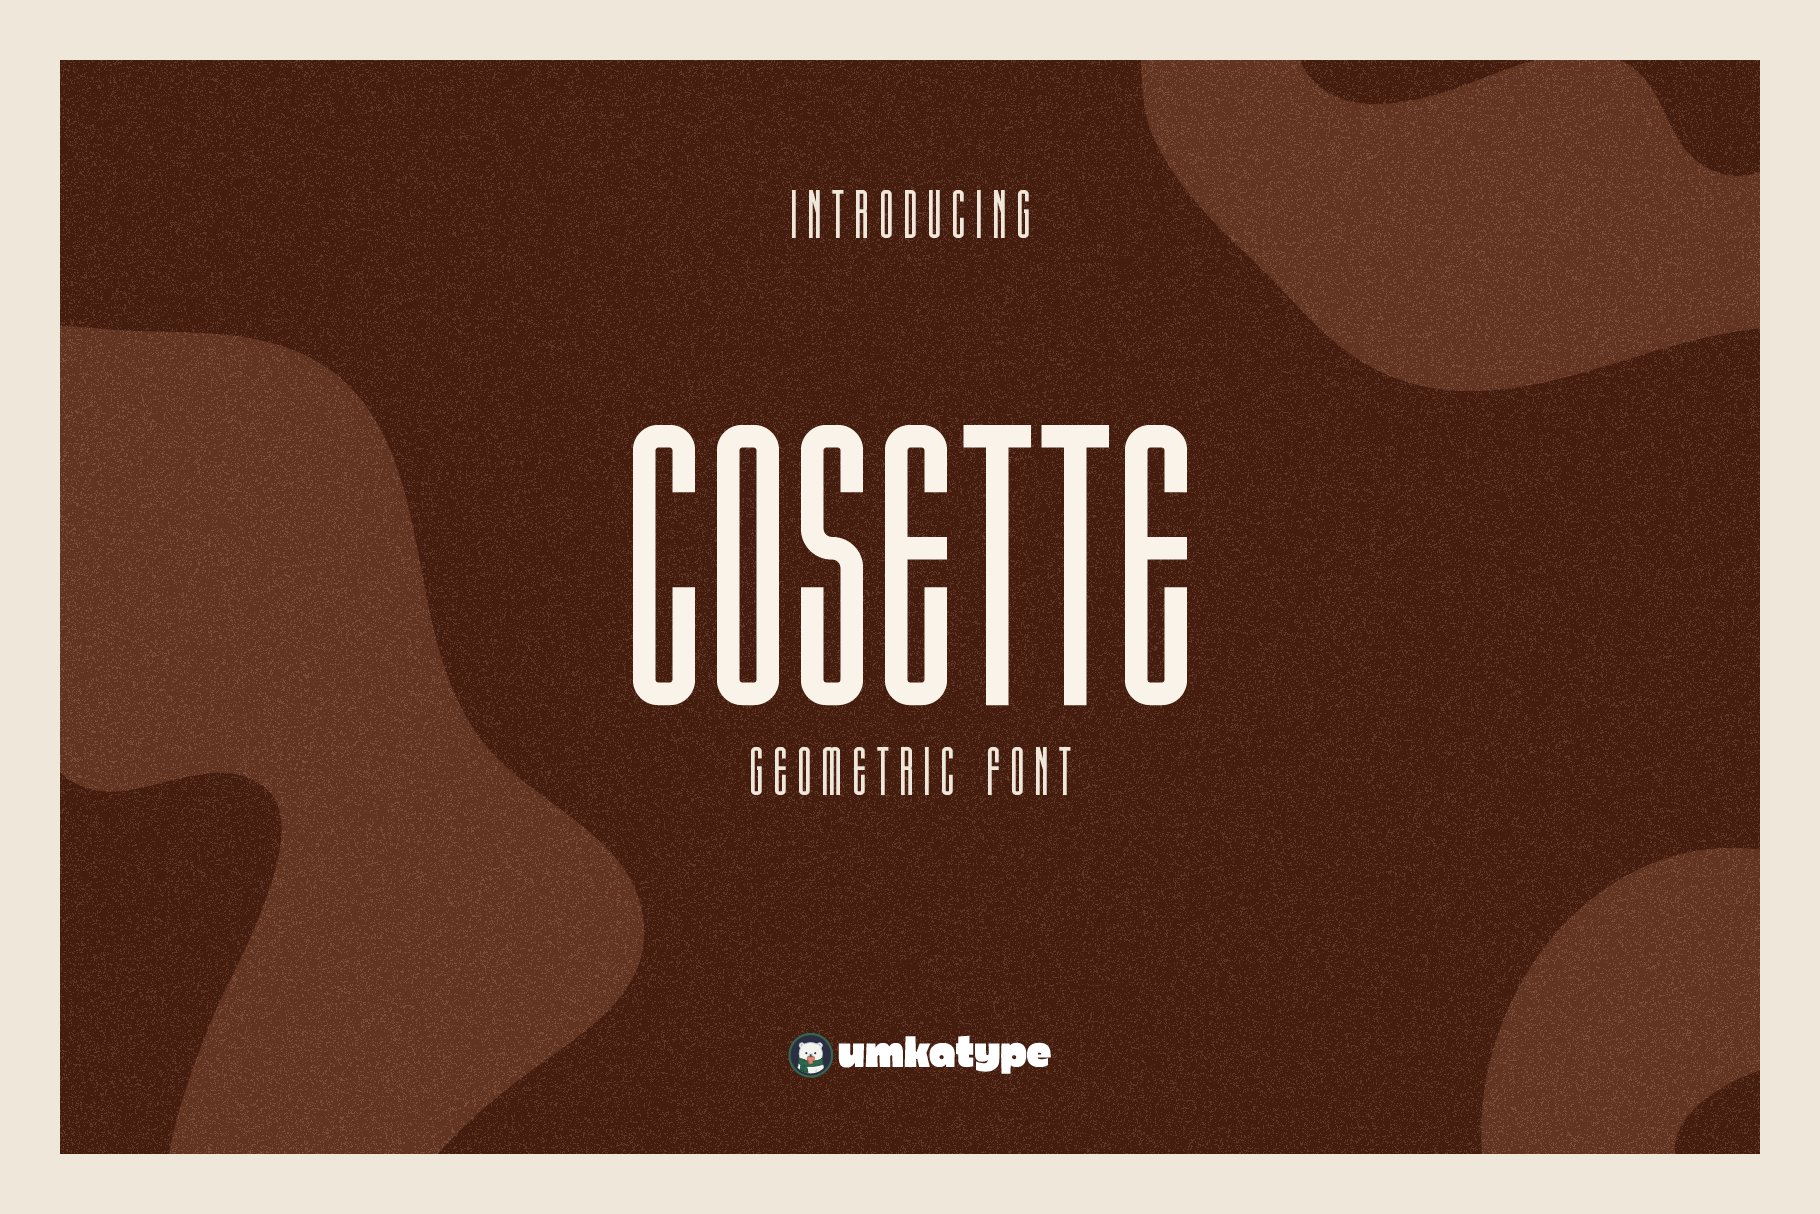 Cosette - A Condensed Title Font cover image.